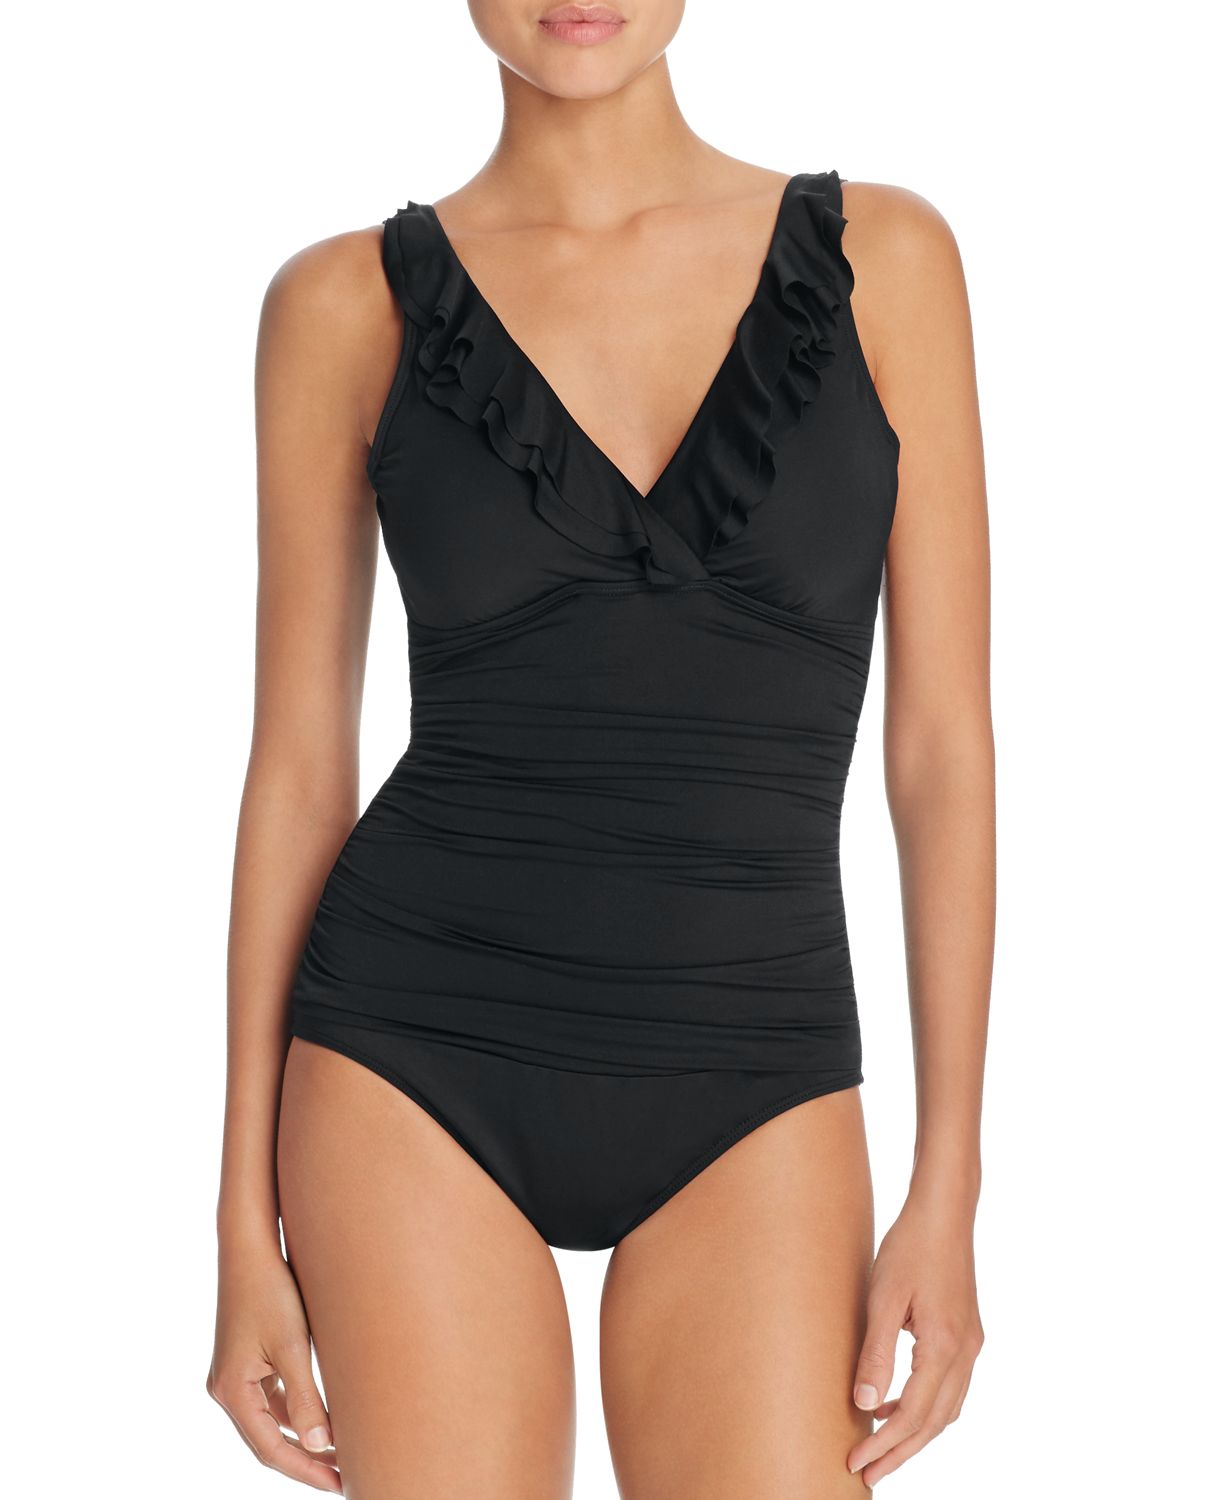 ralph lauren black bathing suit